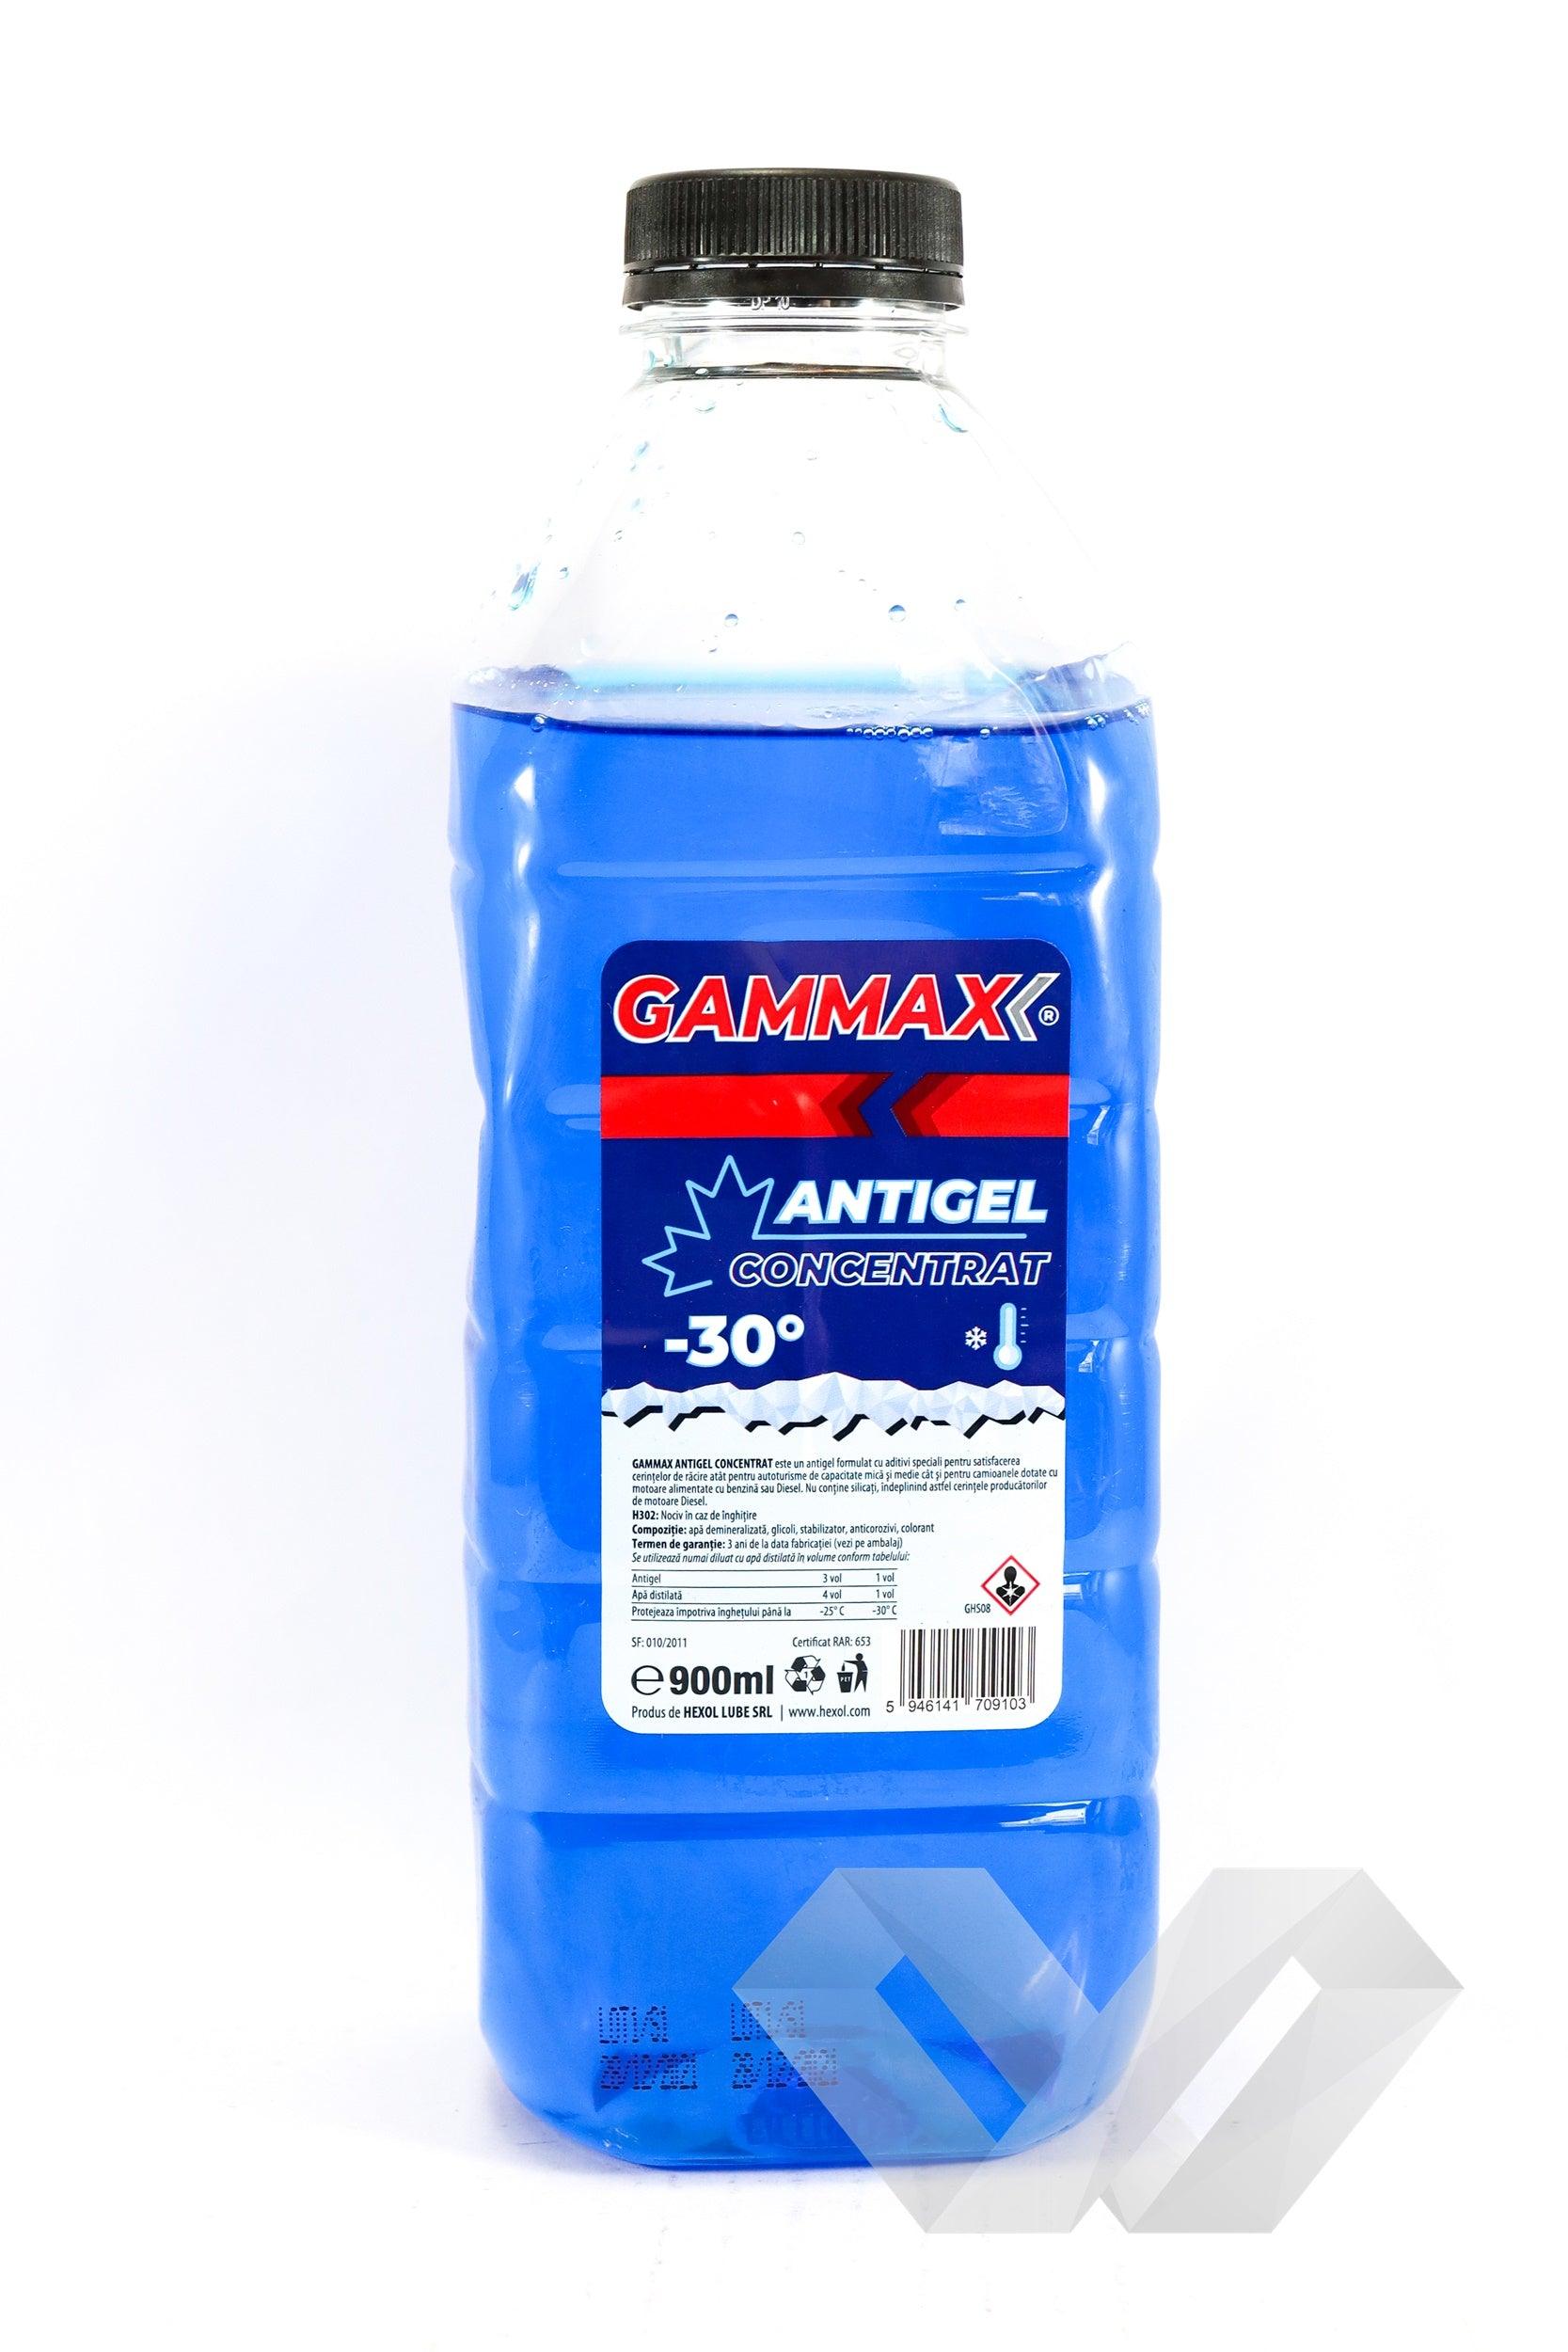 Antigel albastru Gamax concentrat Hexol, -30°C, 1L